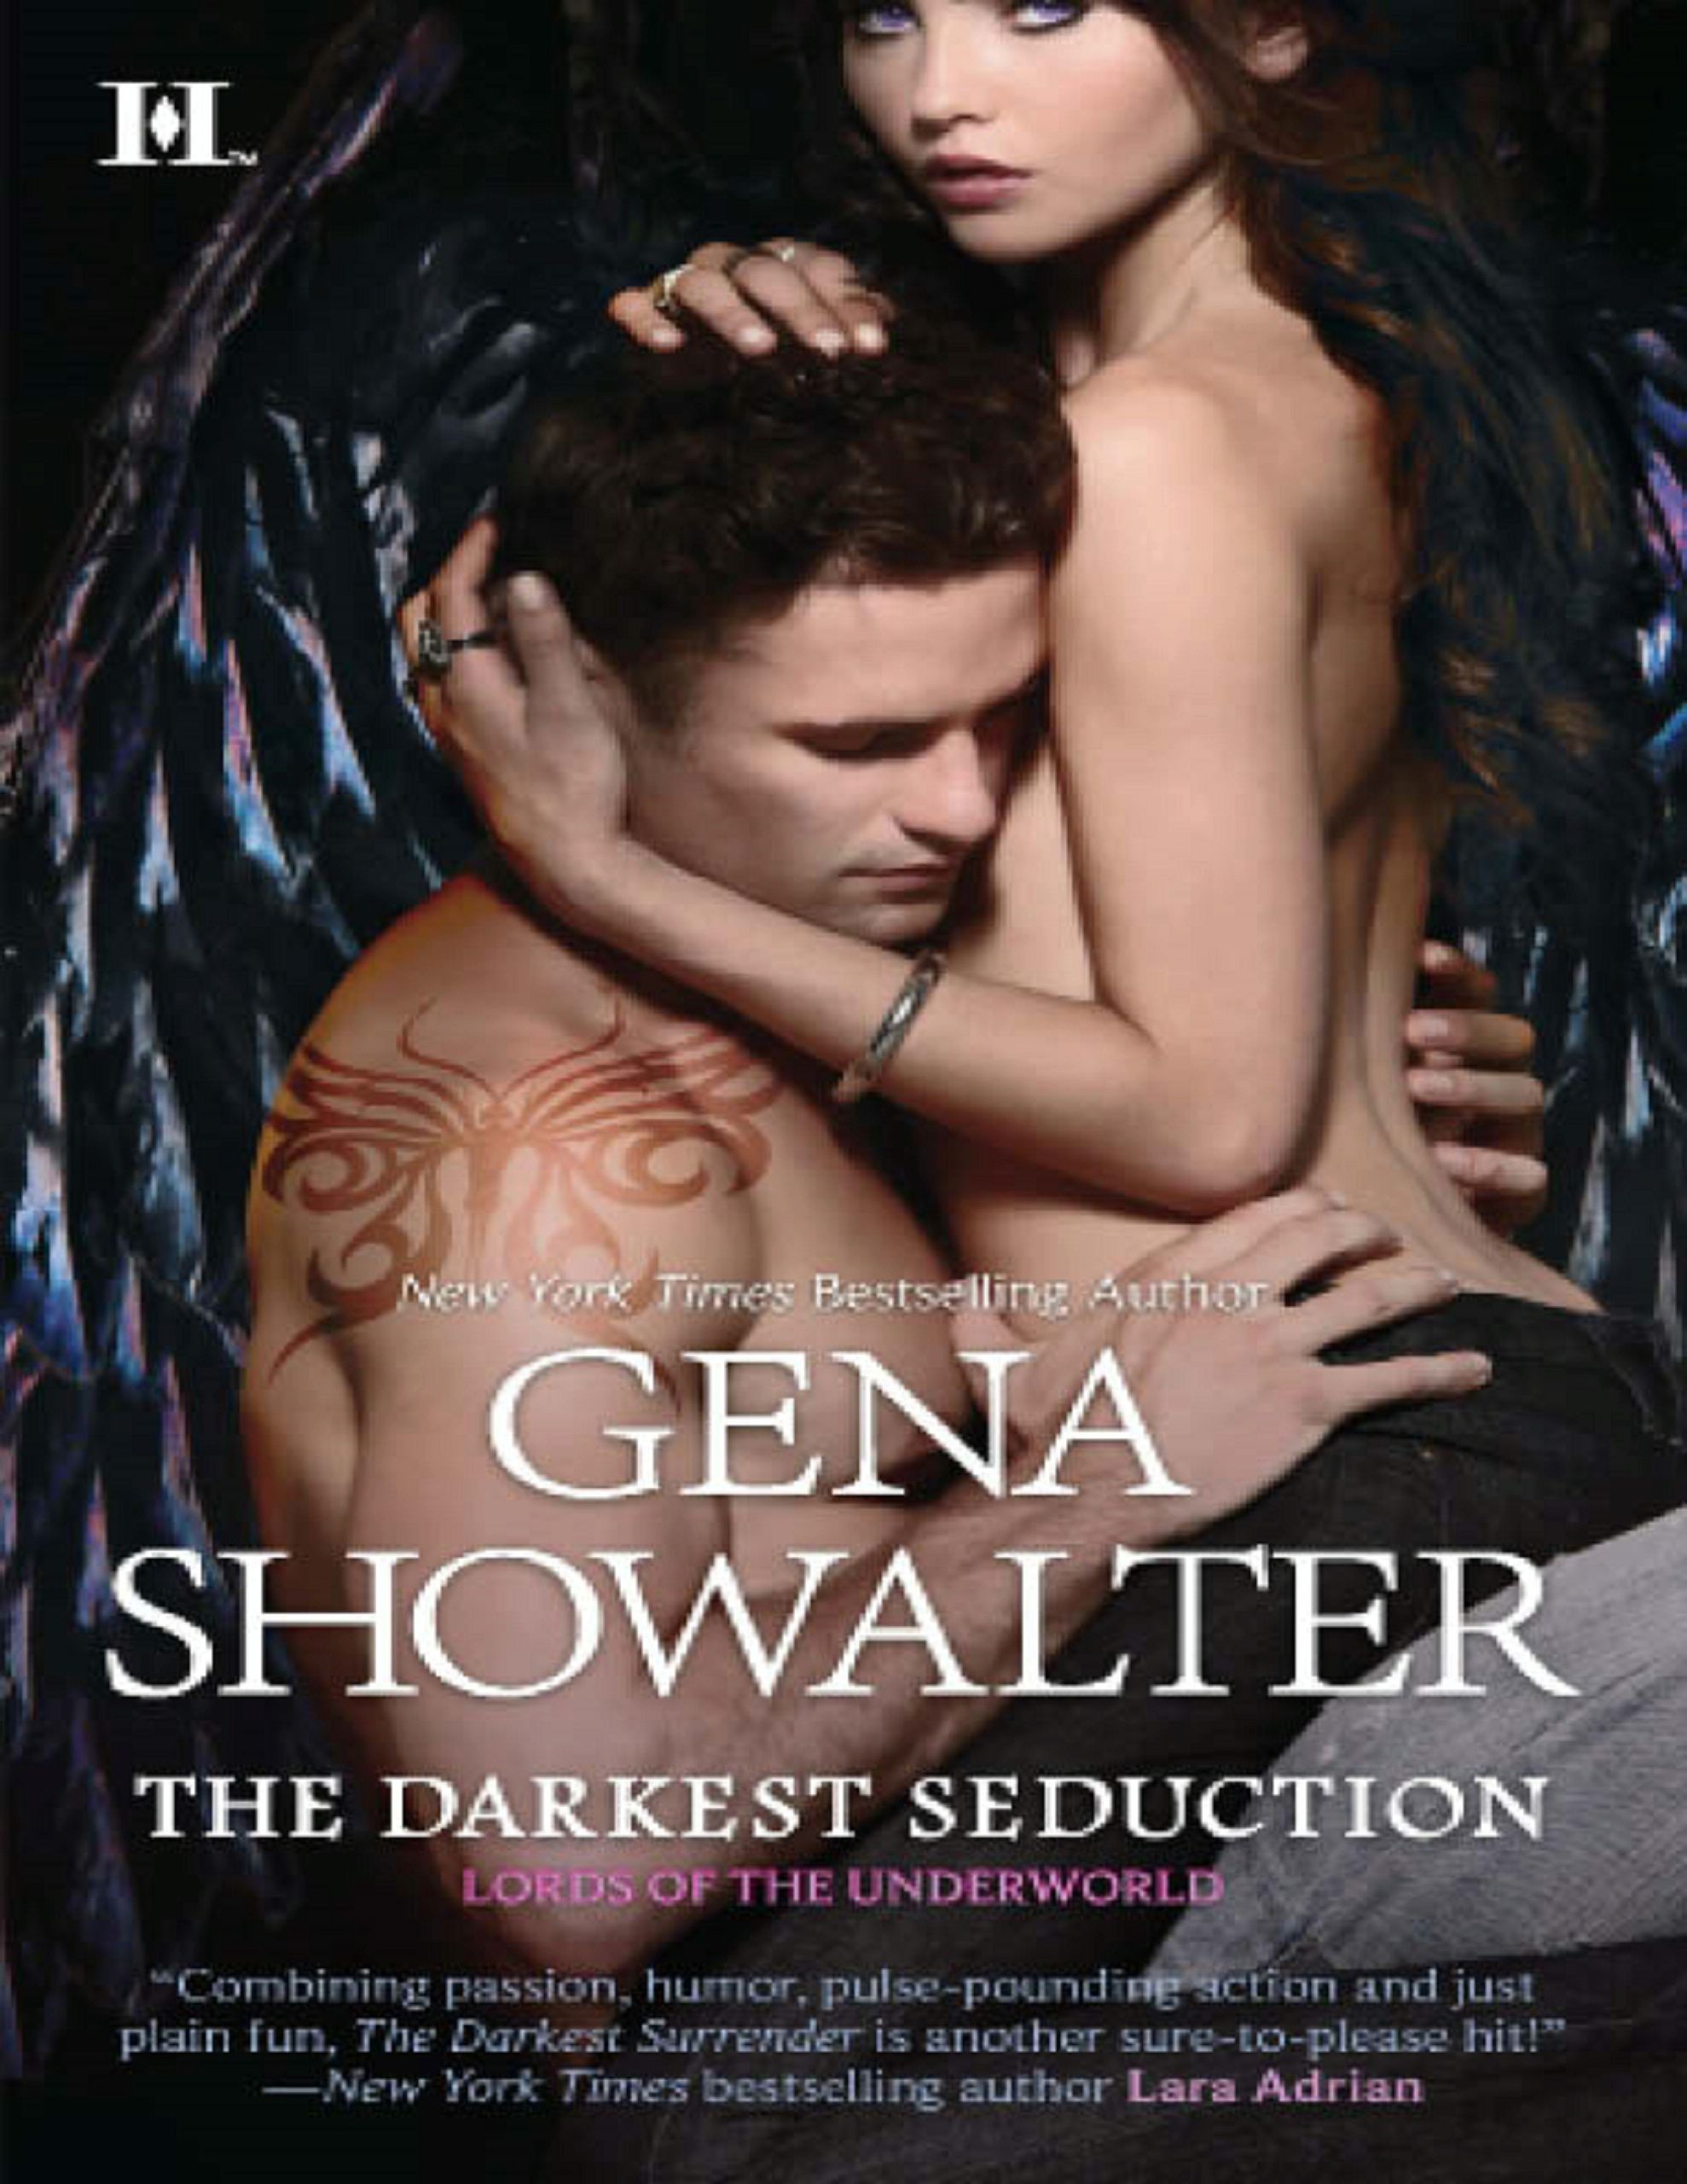 The darkest seduction cover image